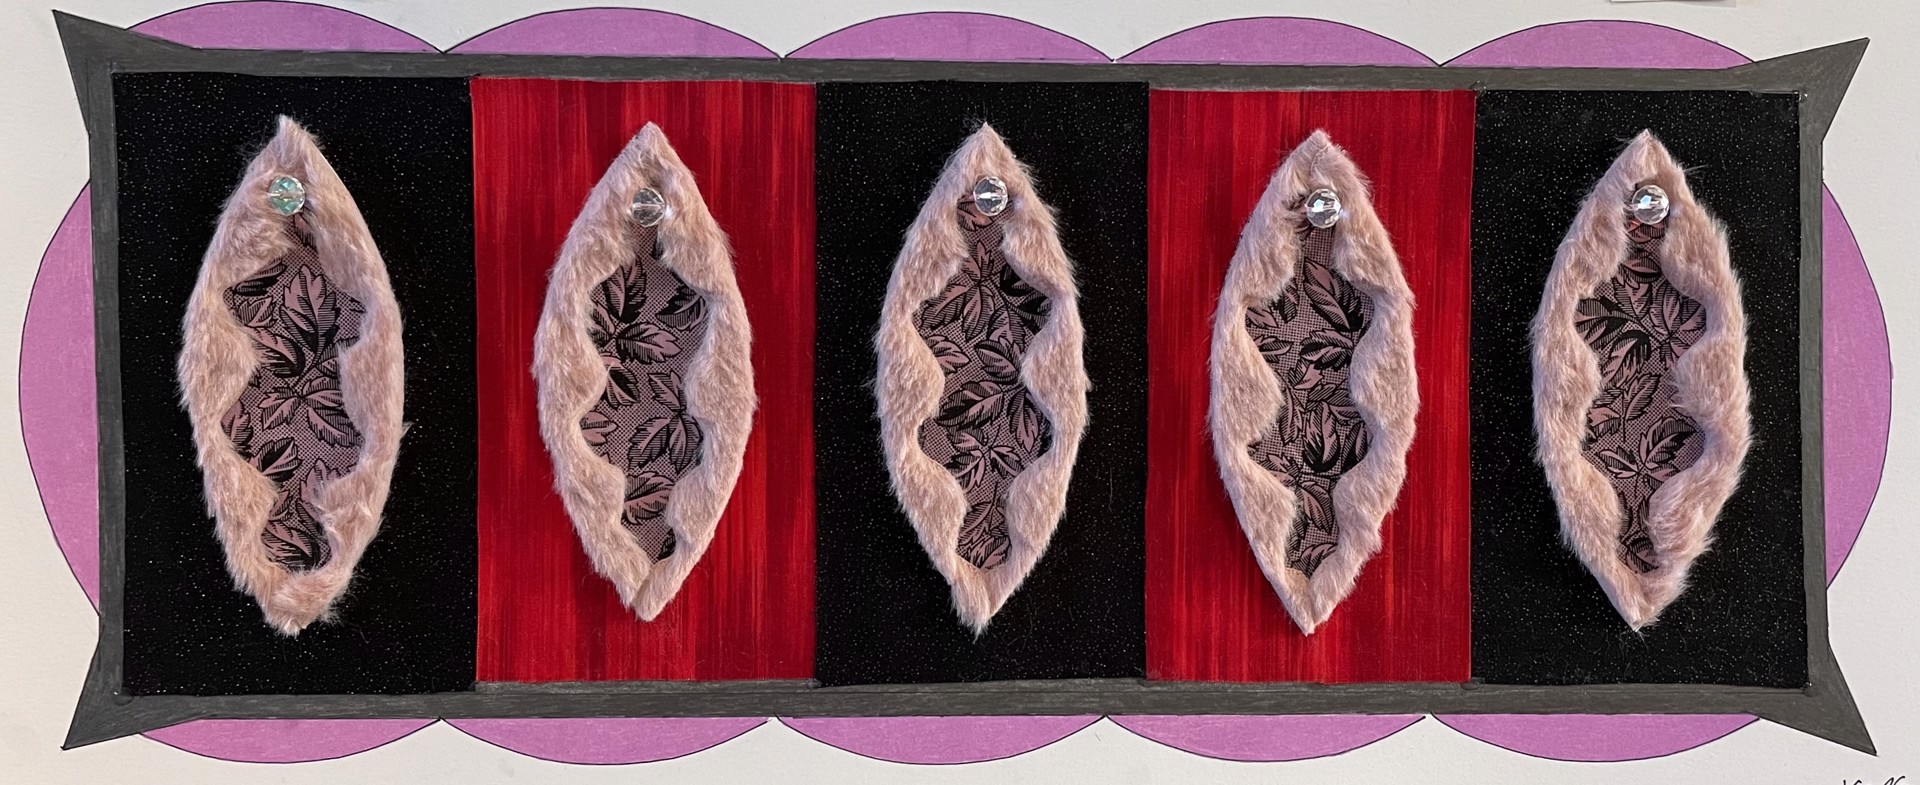 Large Vulvas on Red and Black (5 vulvas) by Deborah Vanko